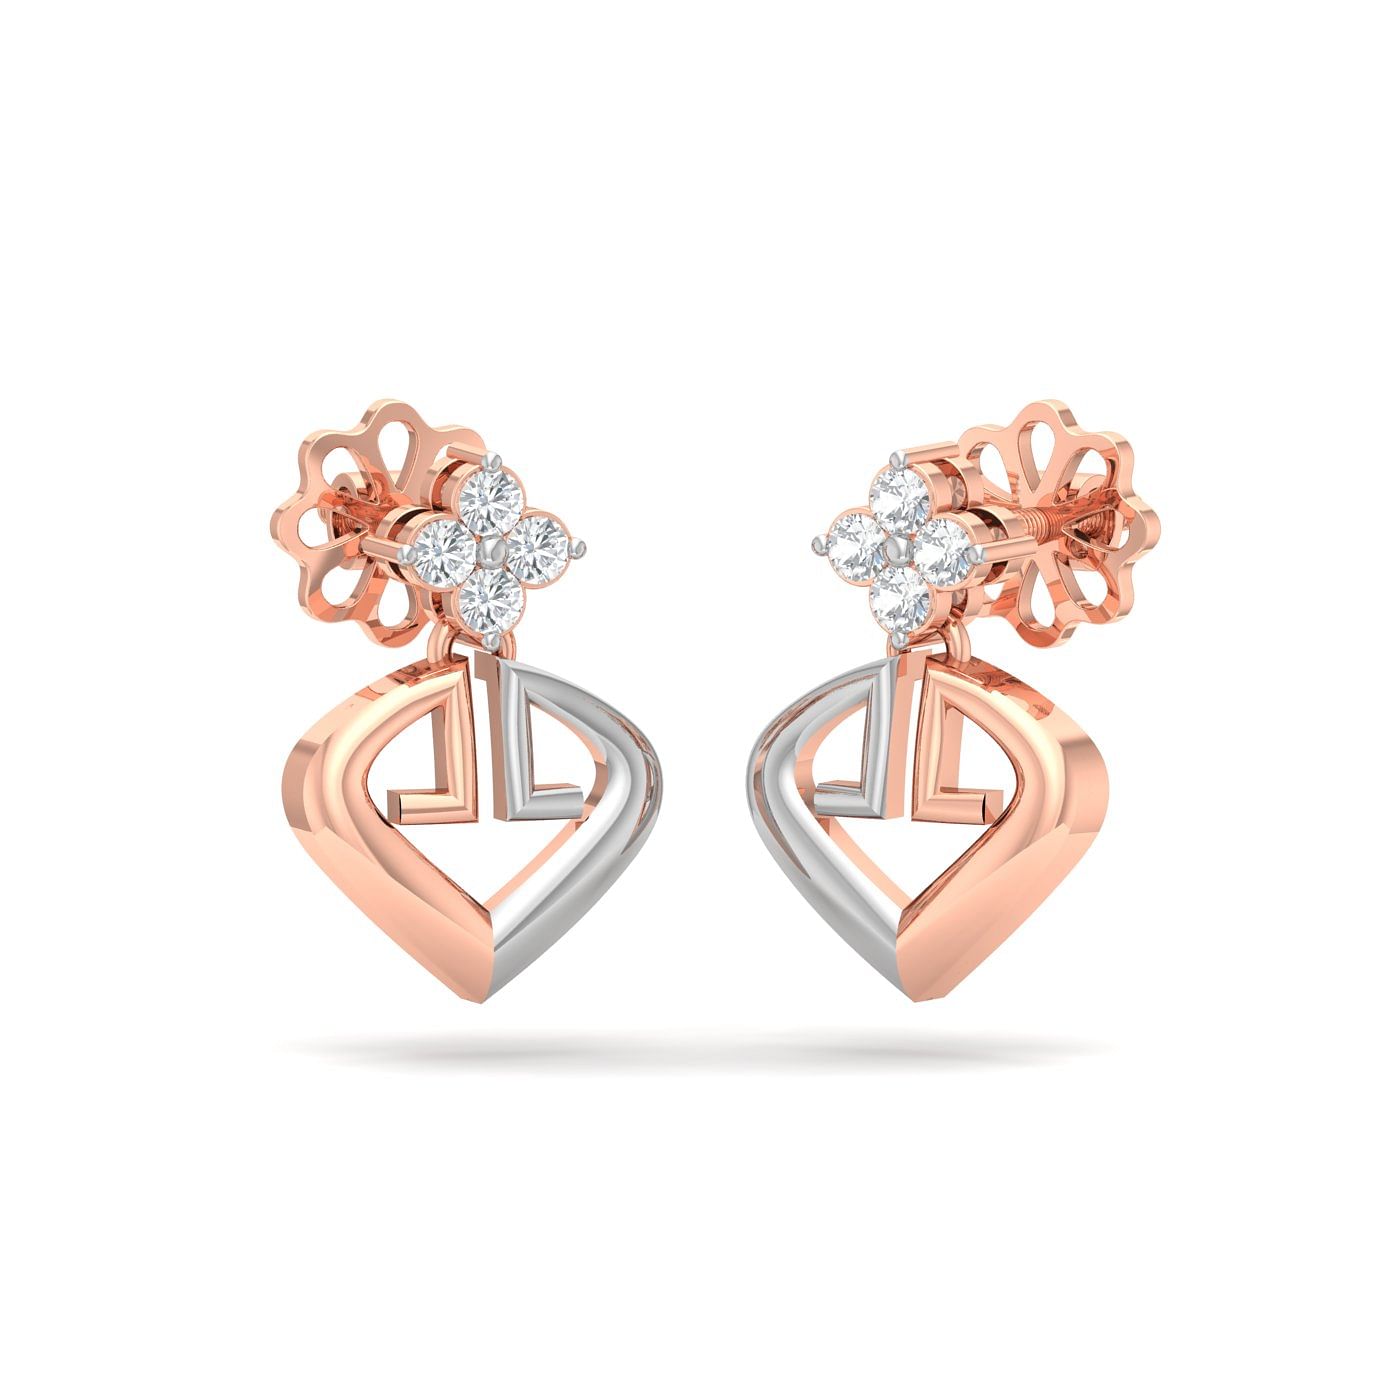 PRIMROSE Cubic Zirconia 18k Rose Gold over Sterling Silver Stud Earring  Sets | eBay